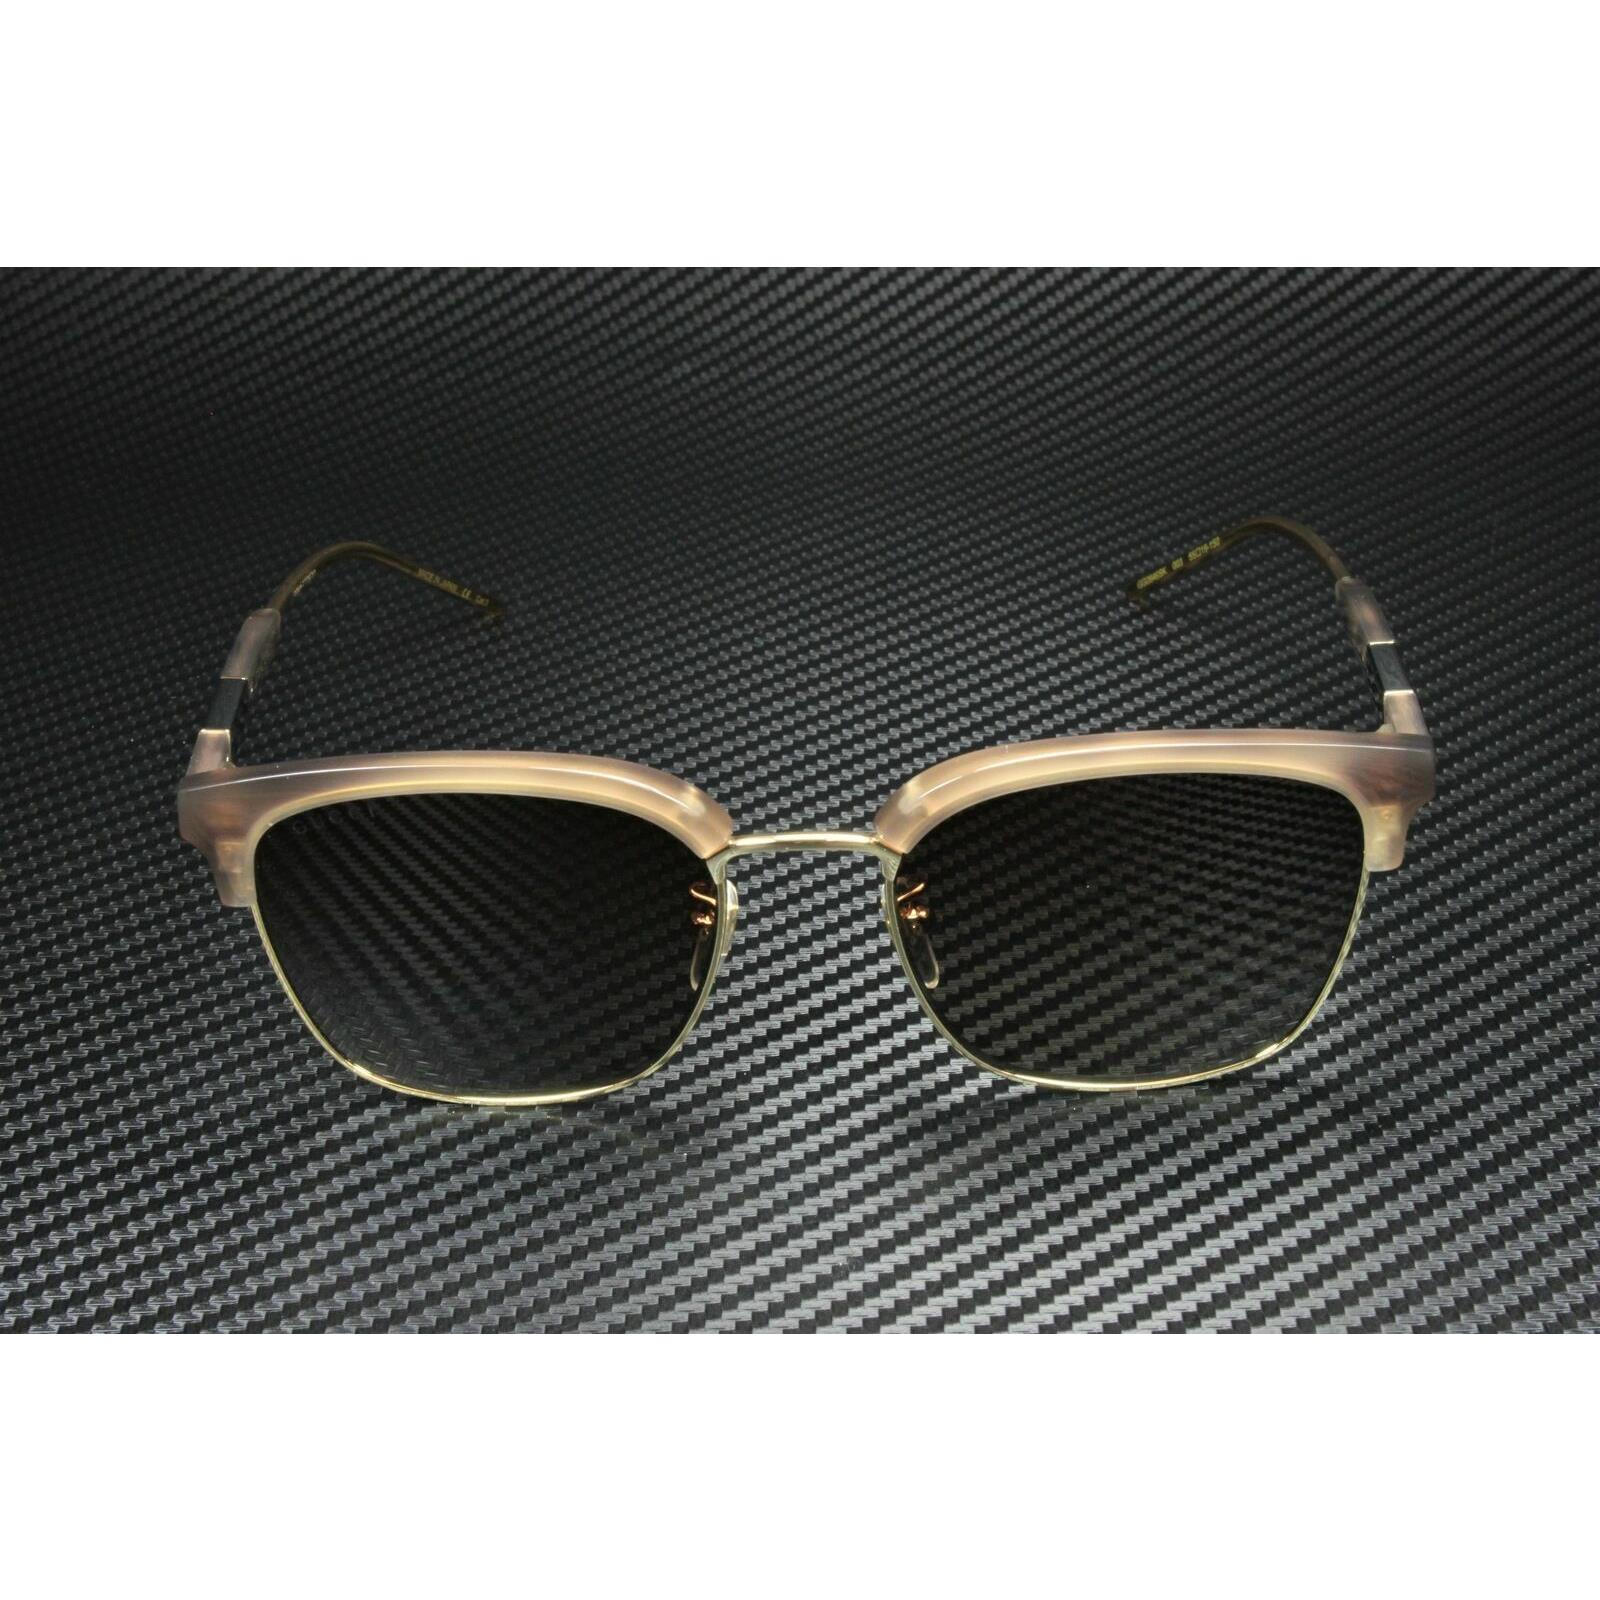 Gucci sunglasses  - Havana Frame, Brown Lens